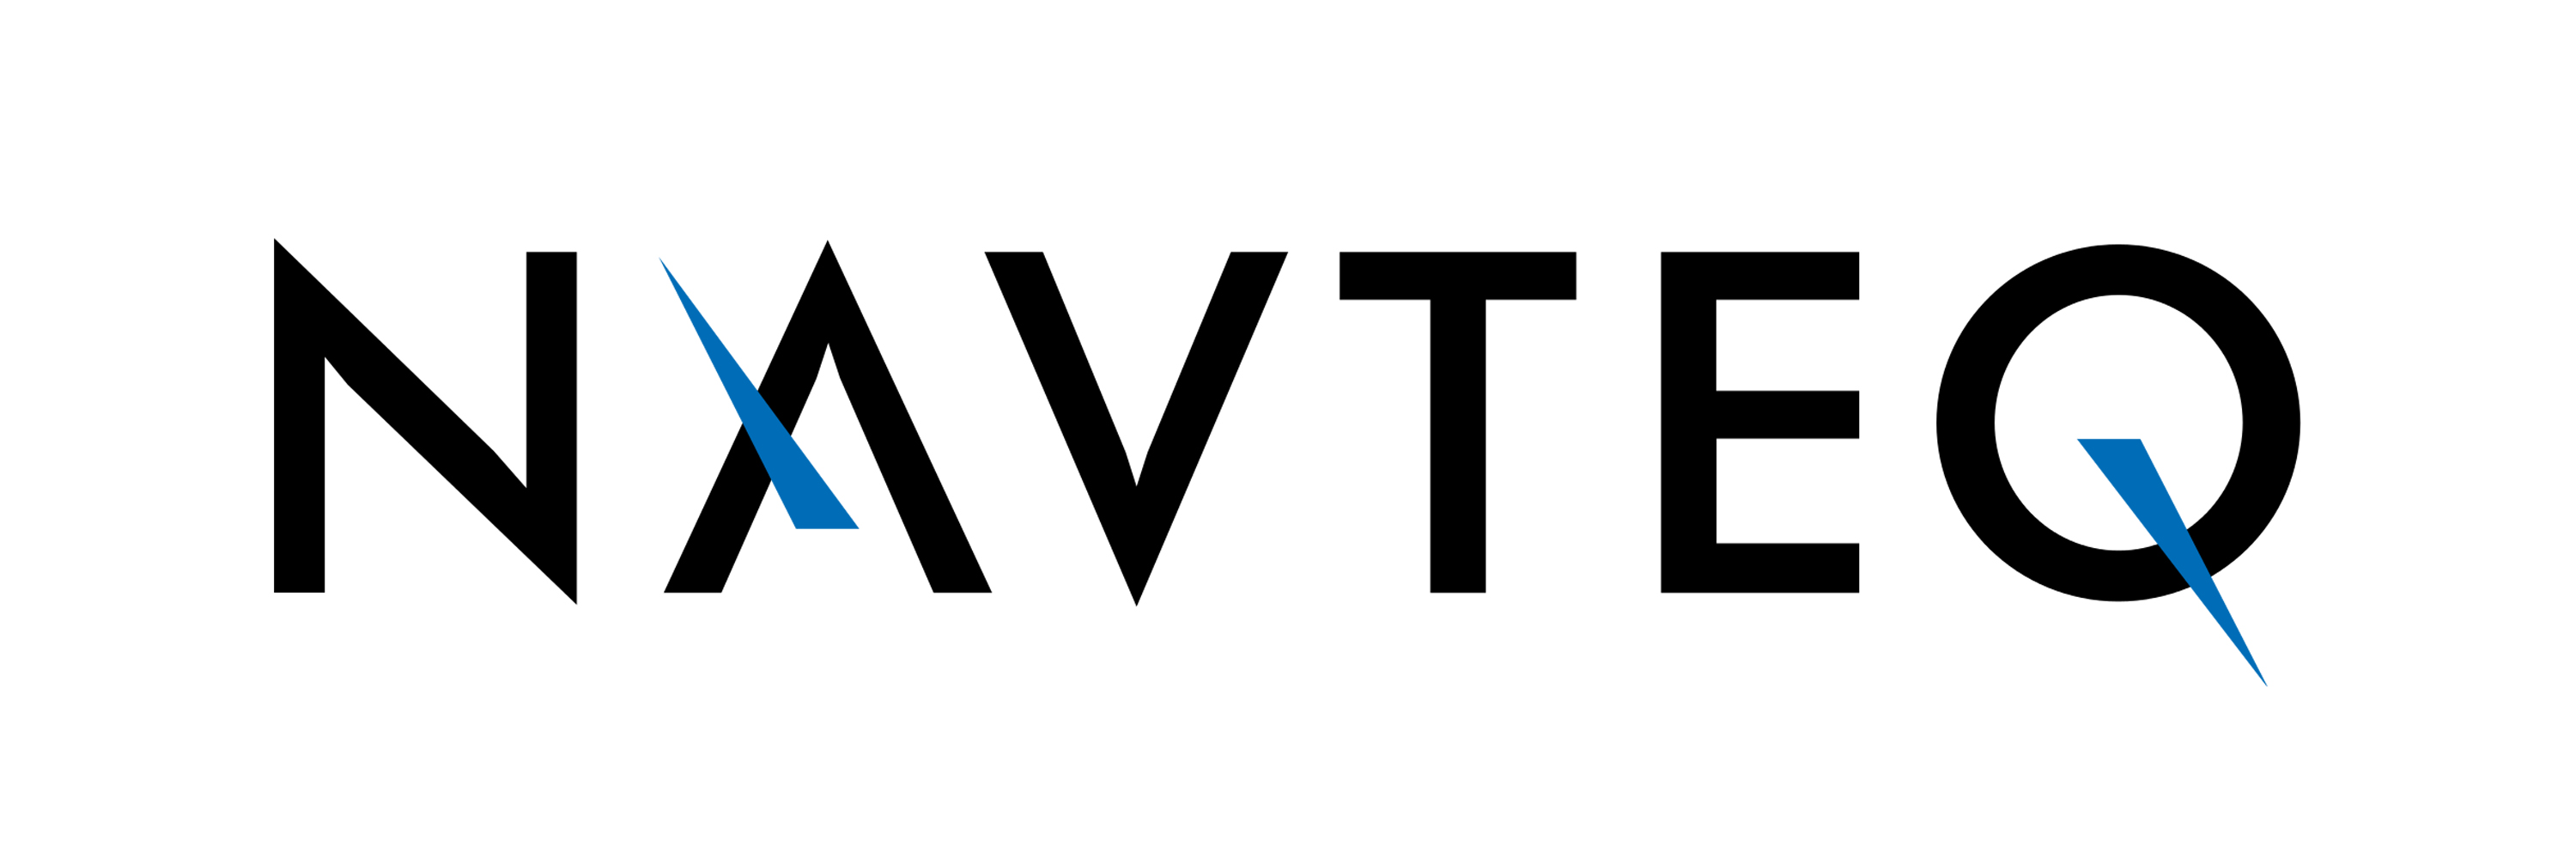 Navteq Logo English Link School